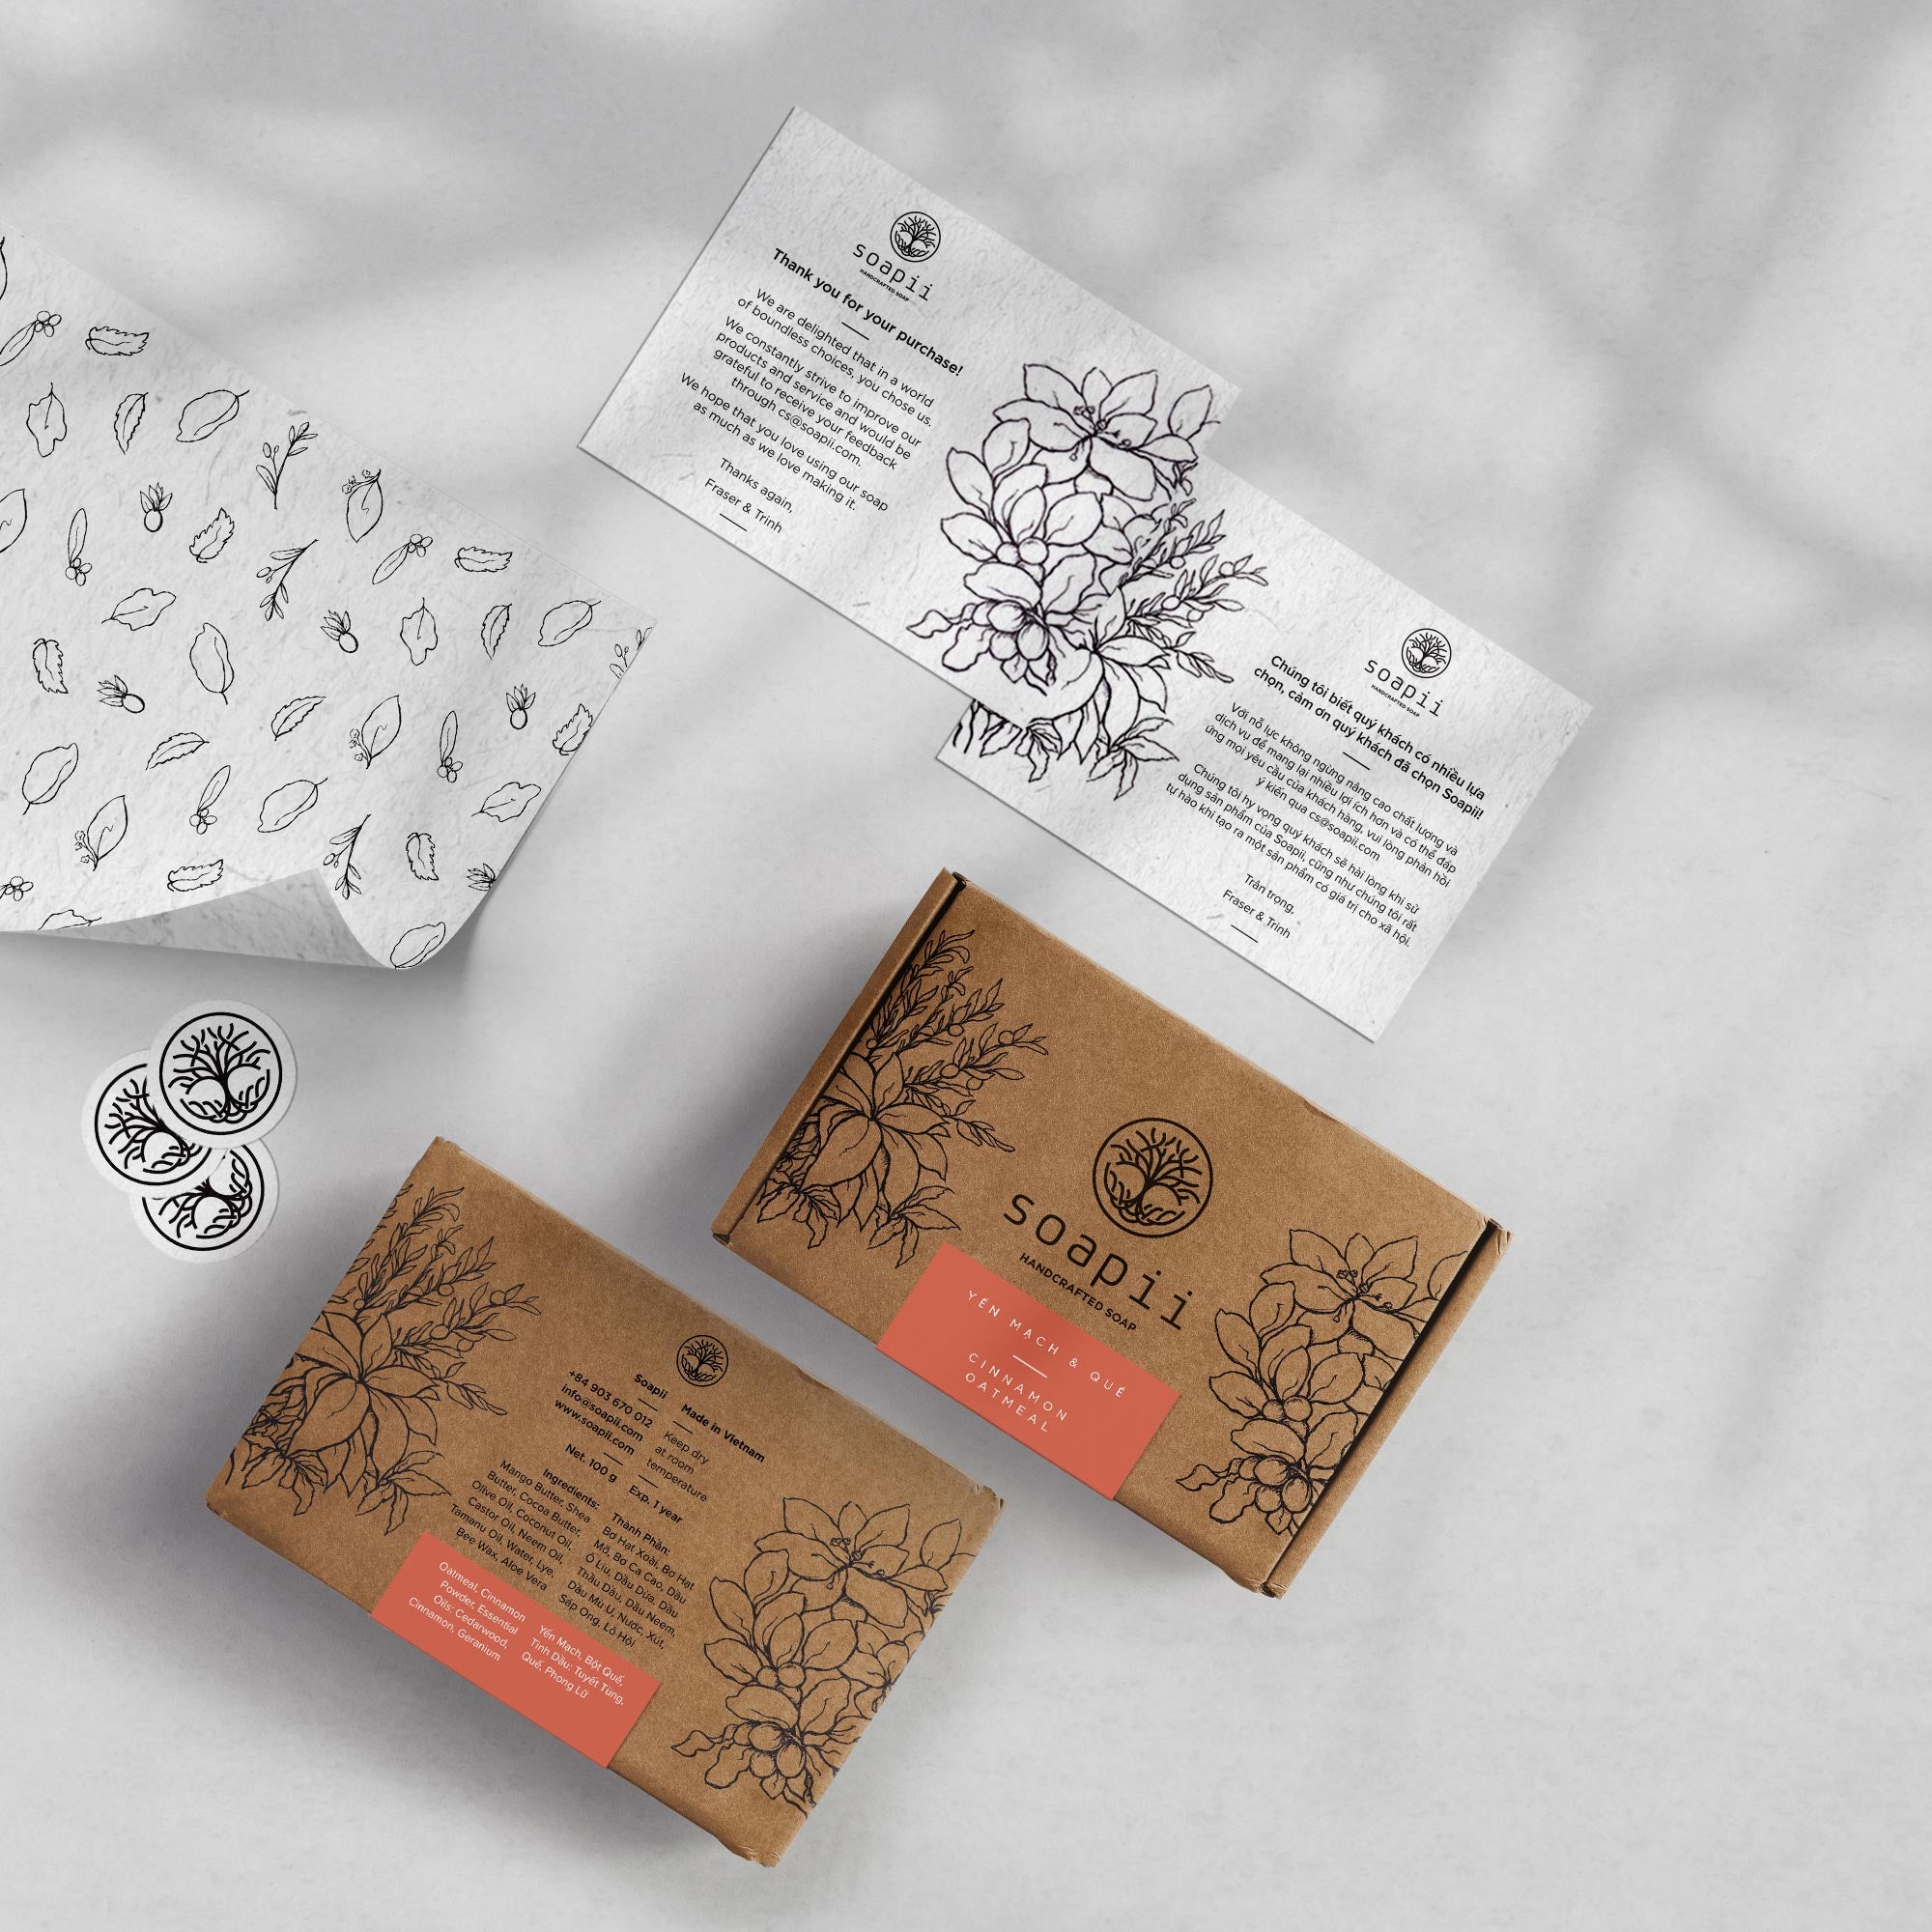 Karolina Król Studio sustainable hand crafted soap packaging design